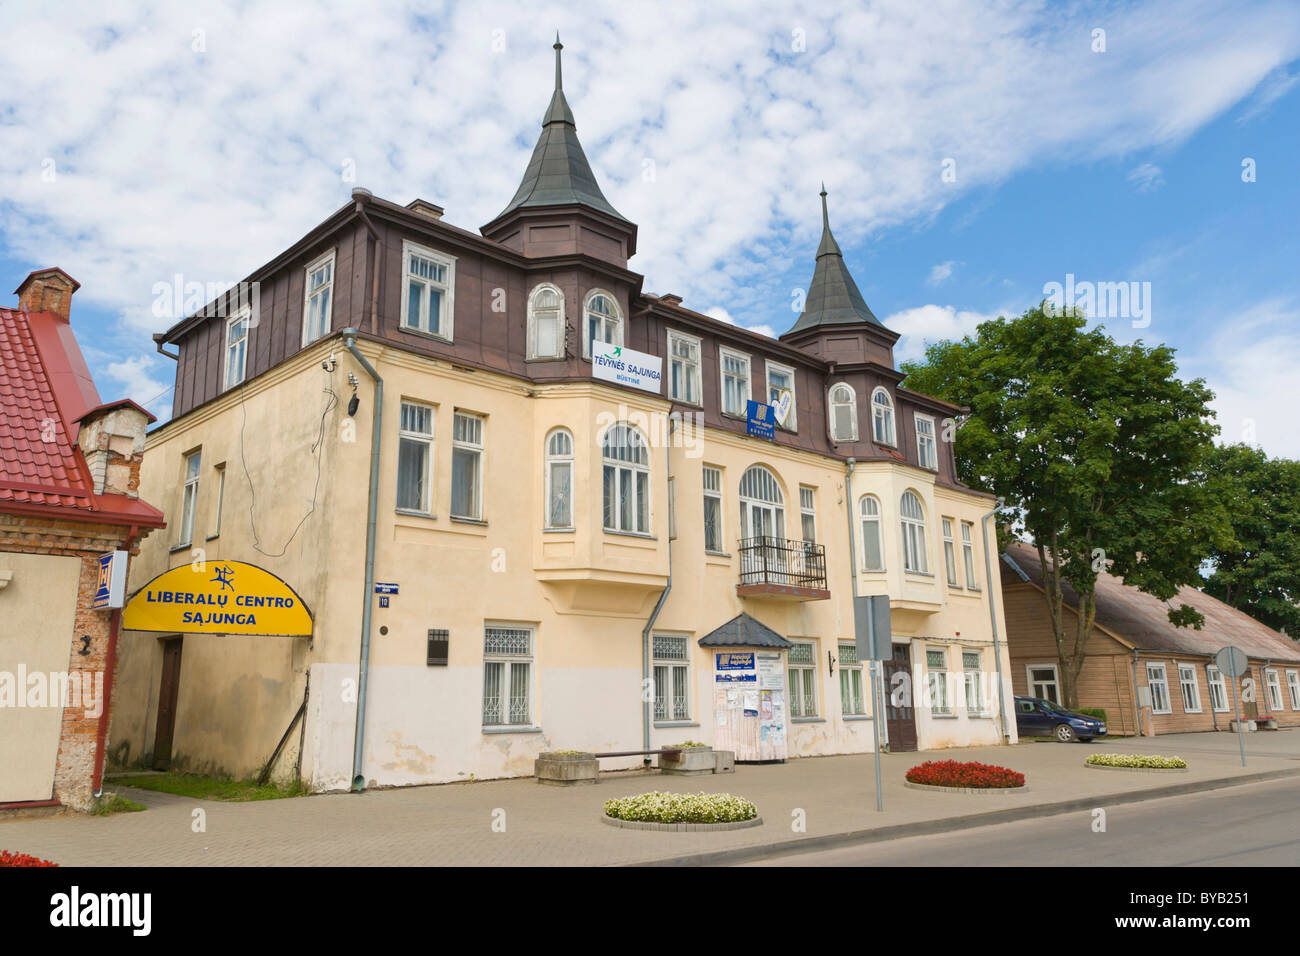 Nepriklausomybes aiksteje, Independence Square, Rokiskis, Panevezys County, Lithuania, Northern Europe Stock Photo